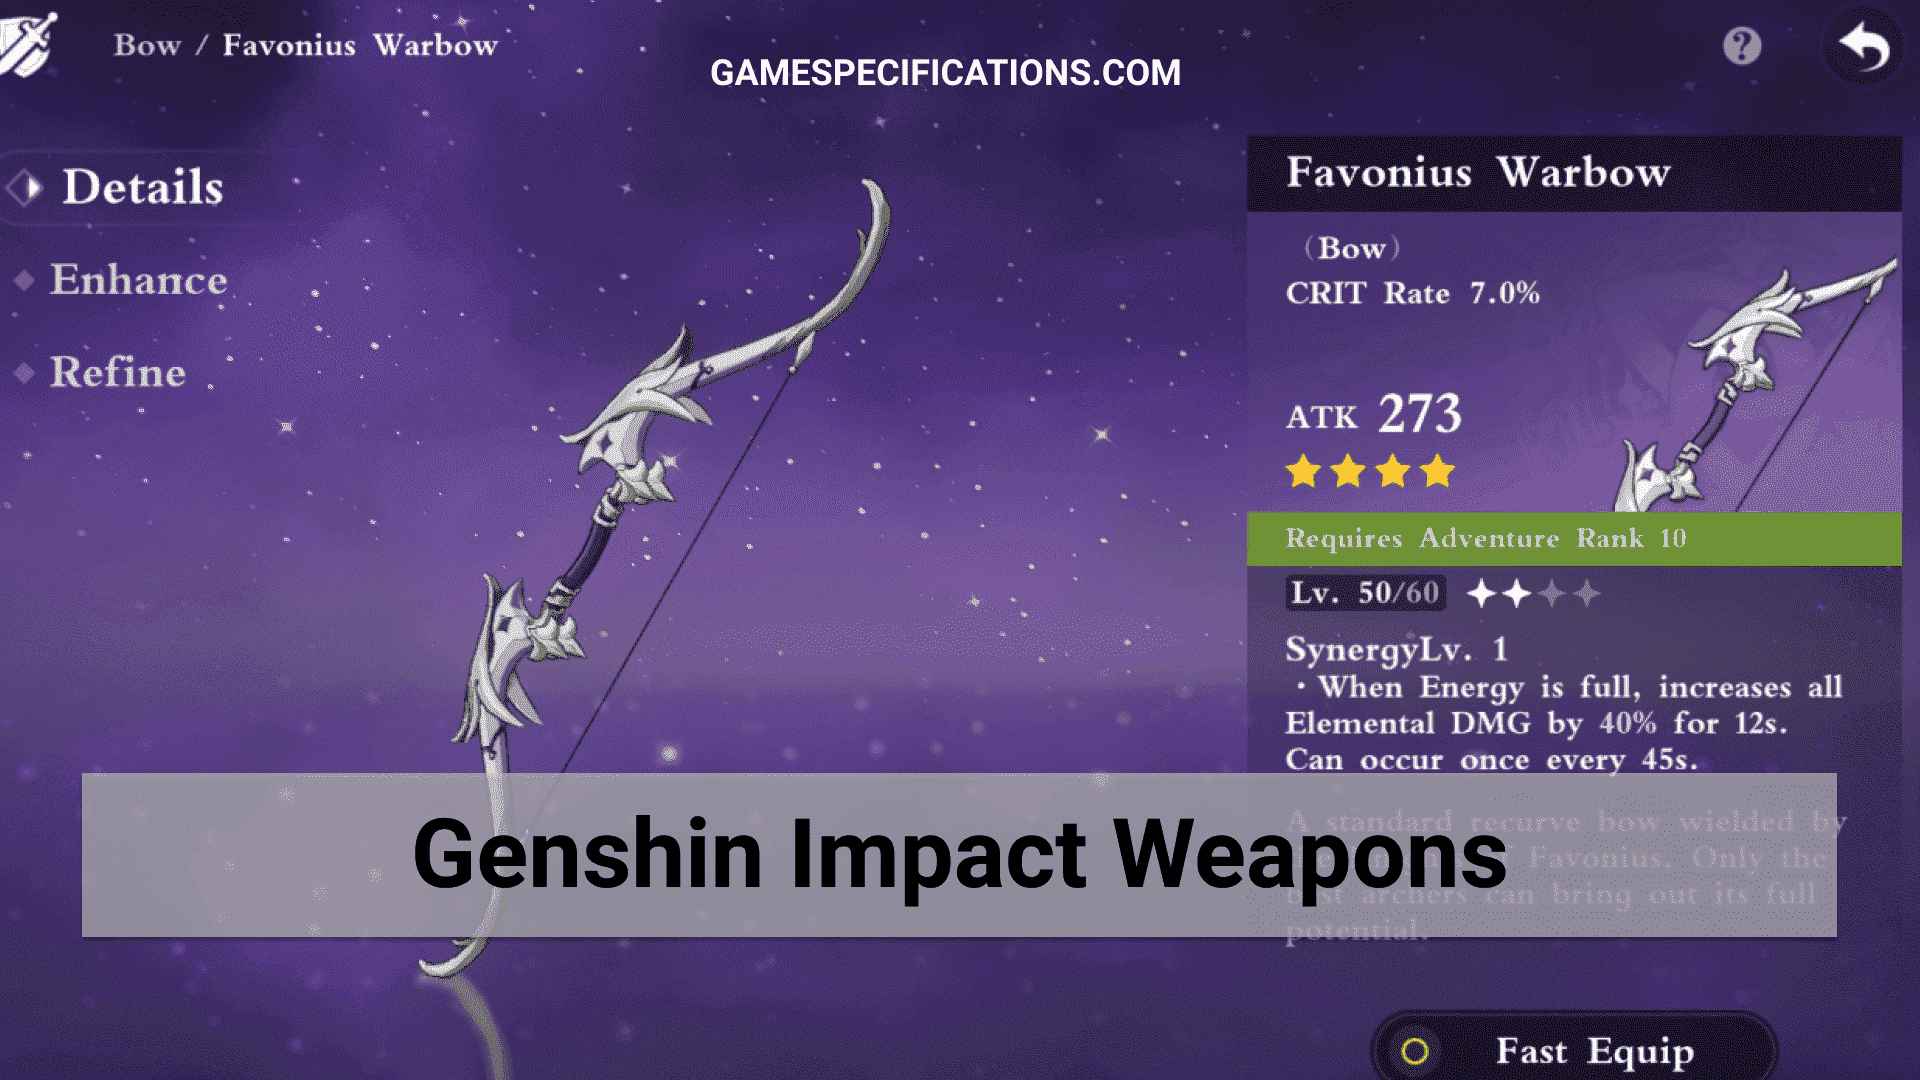 Genshin Impact Weapons to surely make you win battles